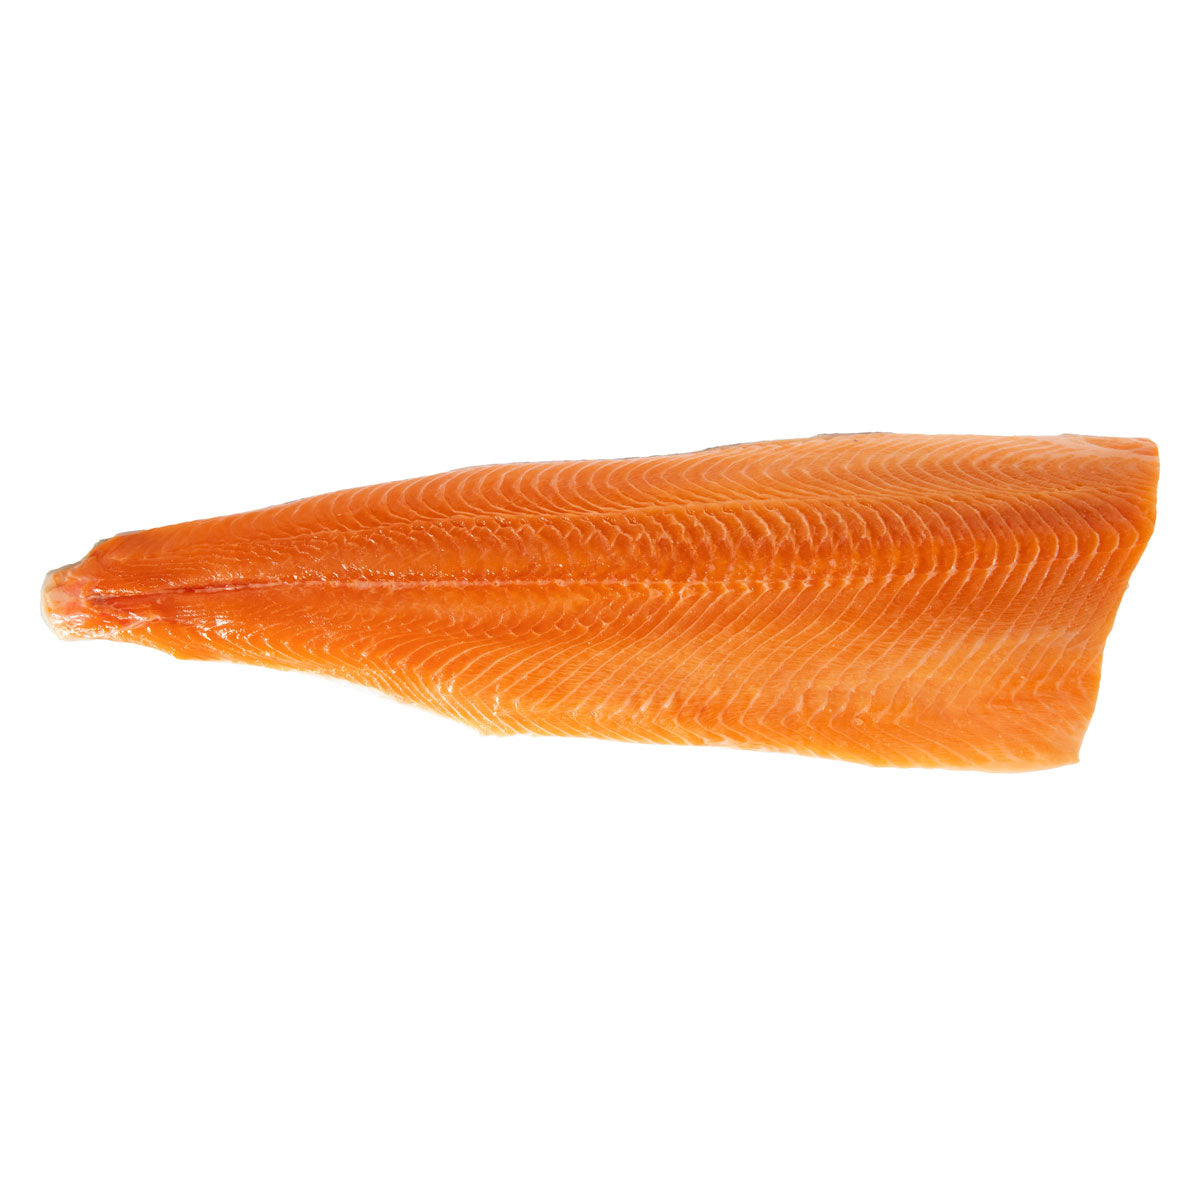 Pierless Fish Farm Raised PBO Scottish Salmon Side